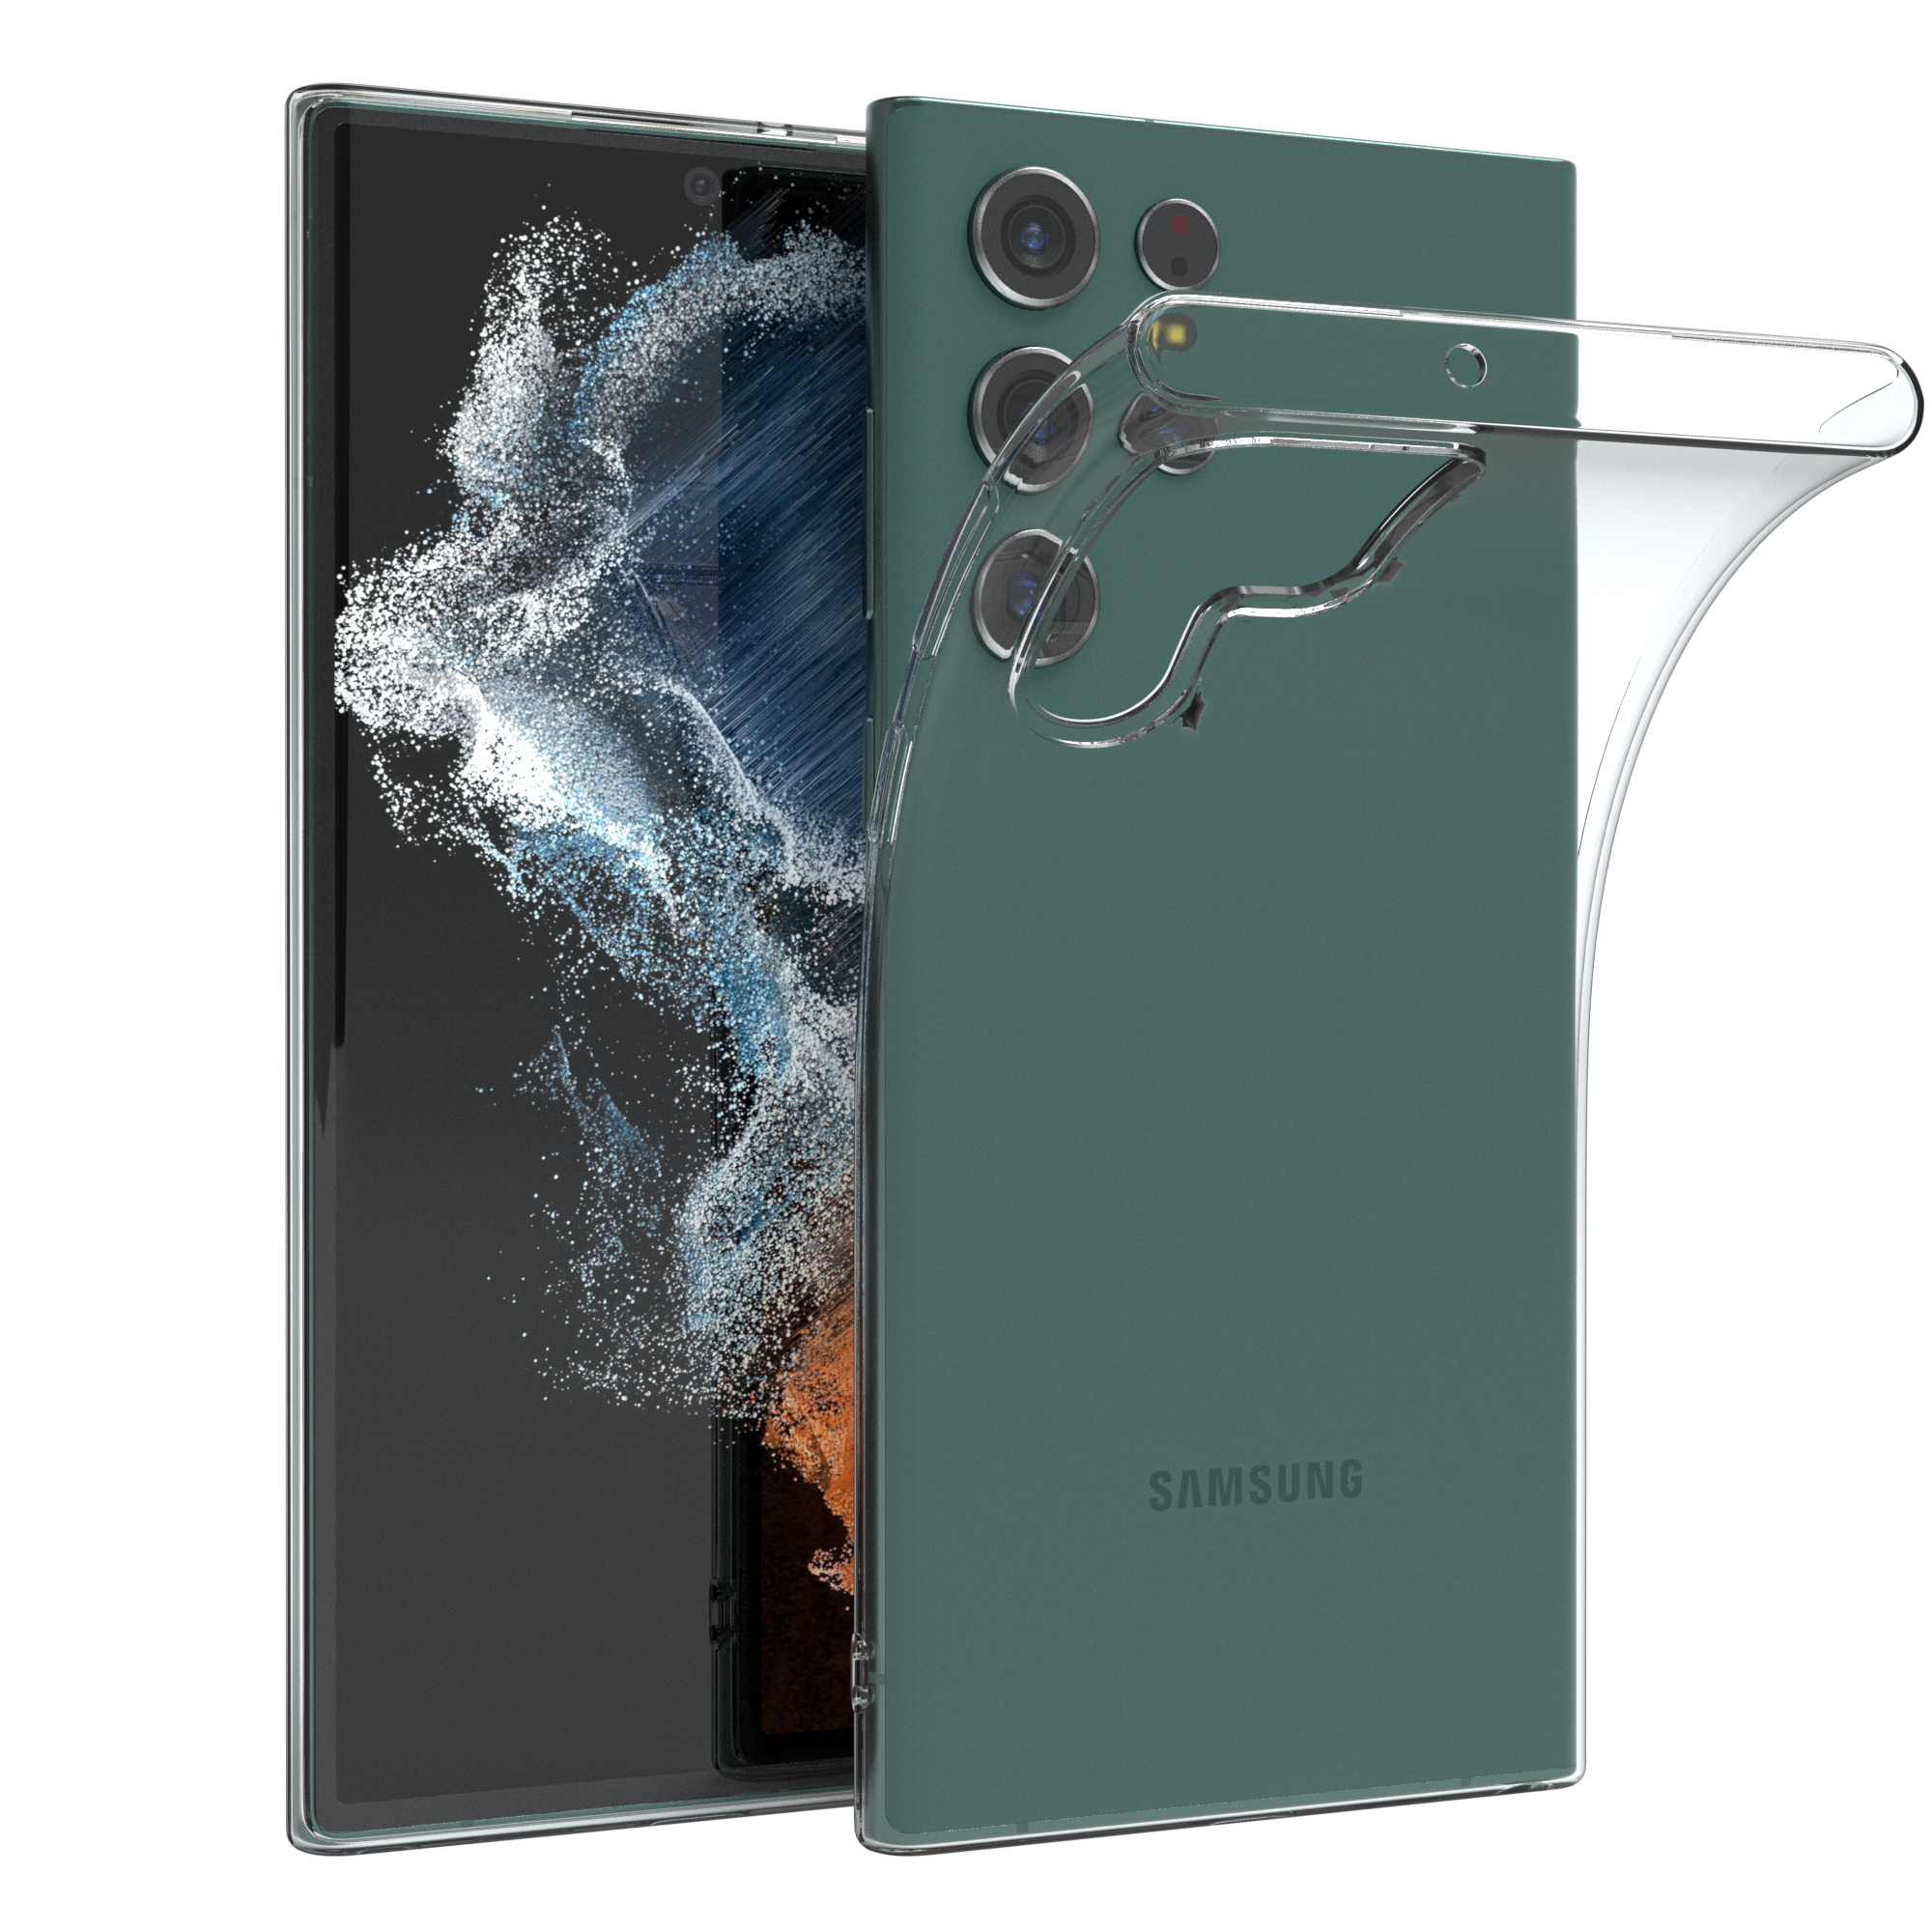 Clear, Galaxy Ultra S22 Slimcover Samsung, CASE 5G, EAZY Durchsichtig Backcover,